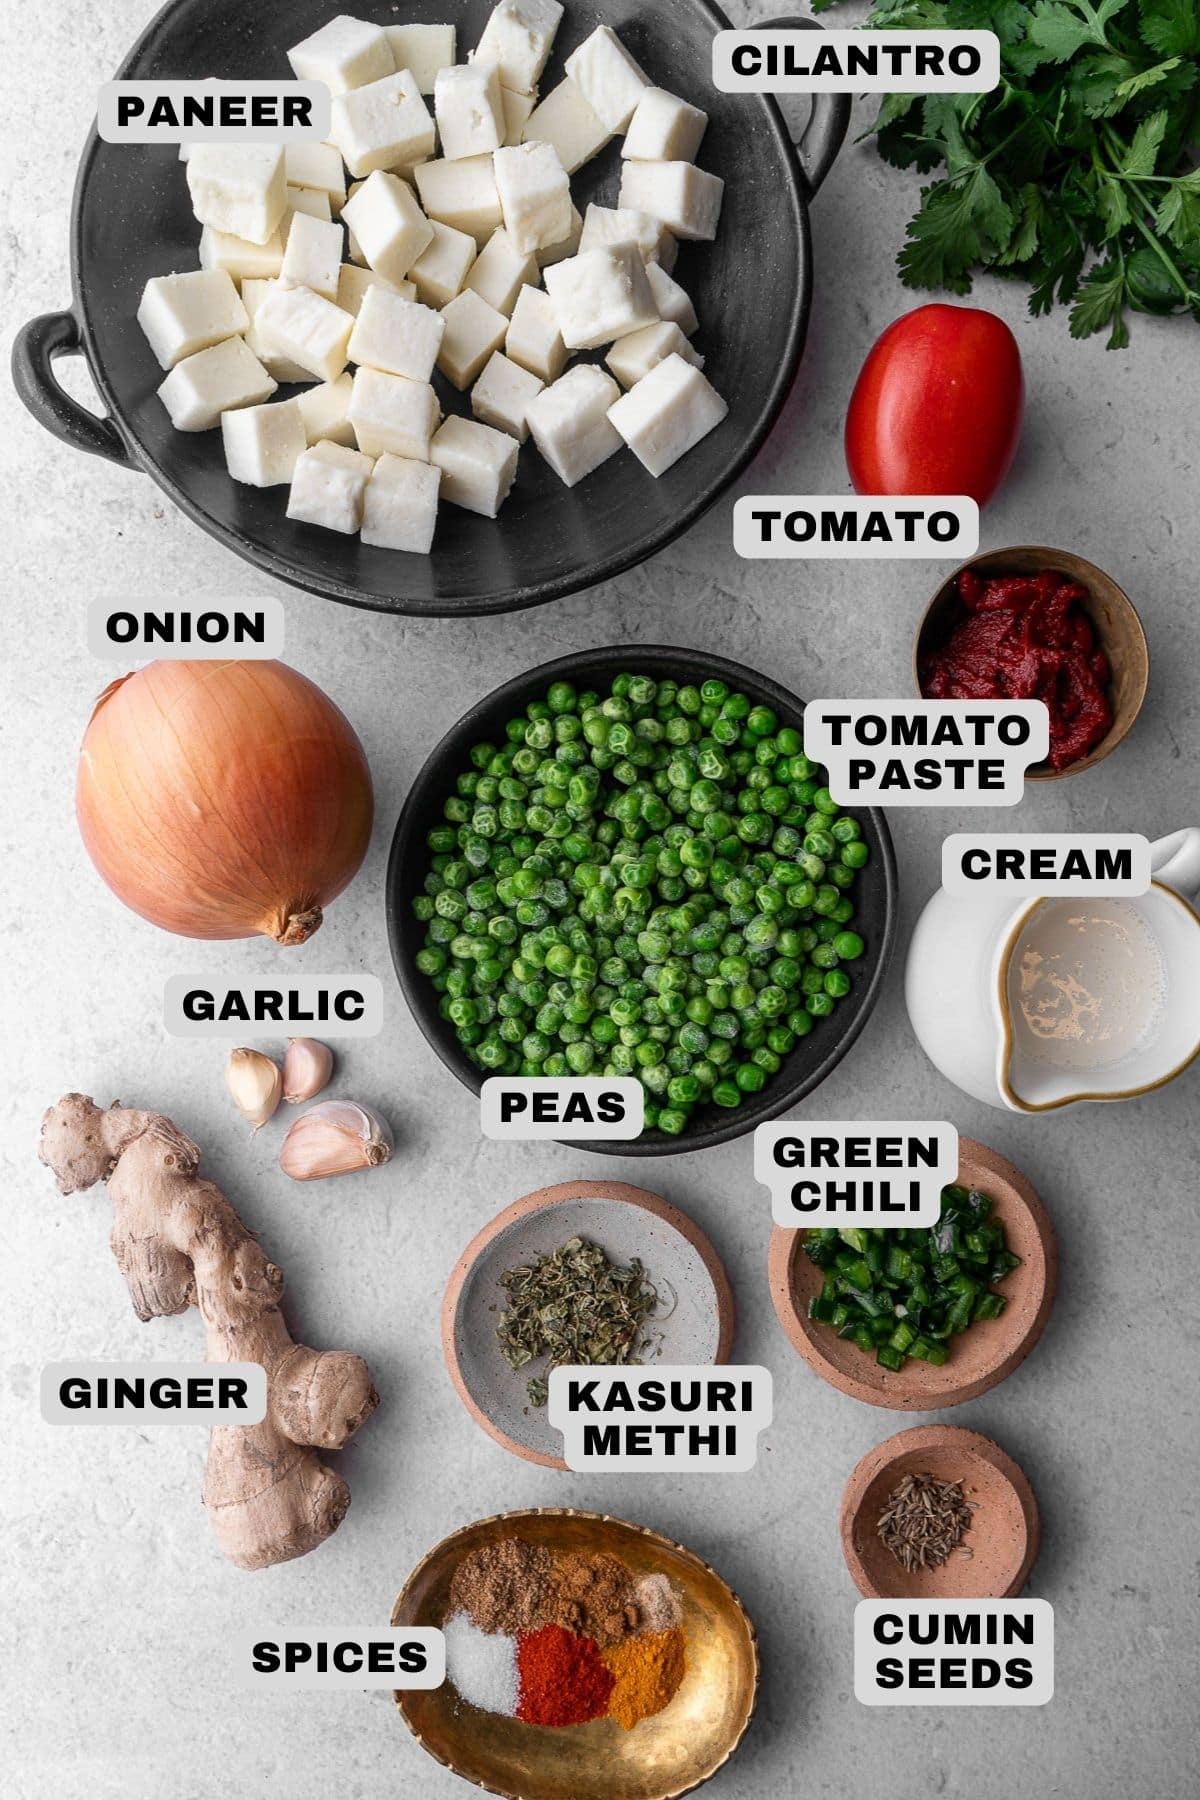 Paneer, cilantro, tomato, onion, tomato paste, cream, peas, garlic, green chili, kasuri methi, ginger, spices, cumin seeds ingredients with labels.